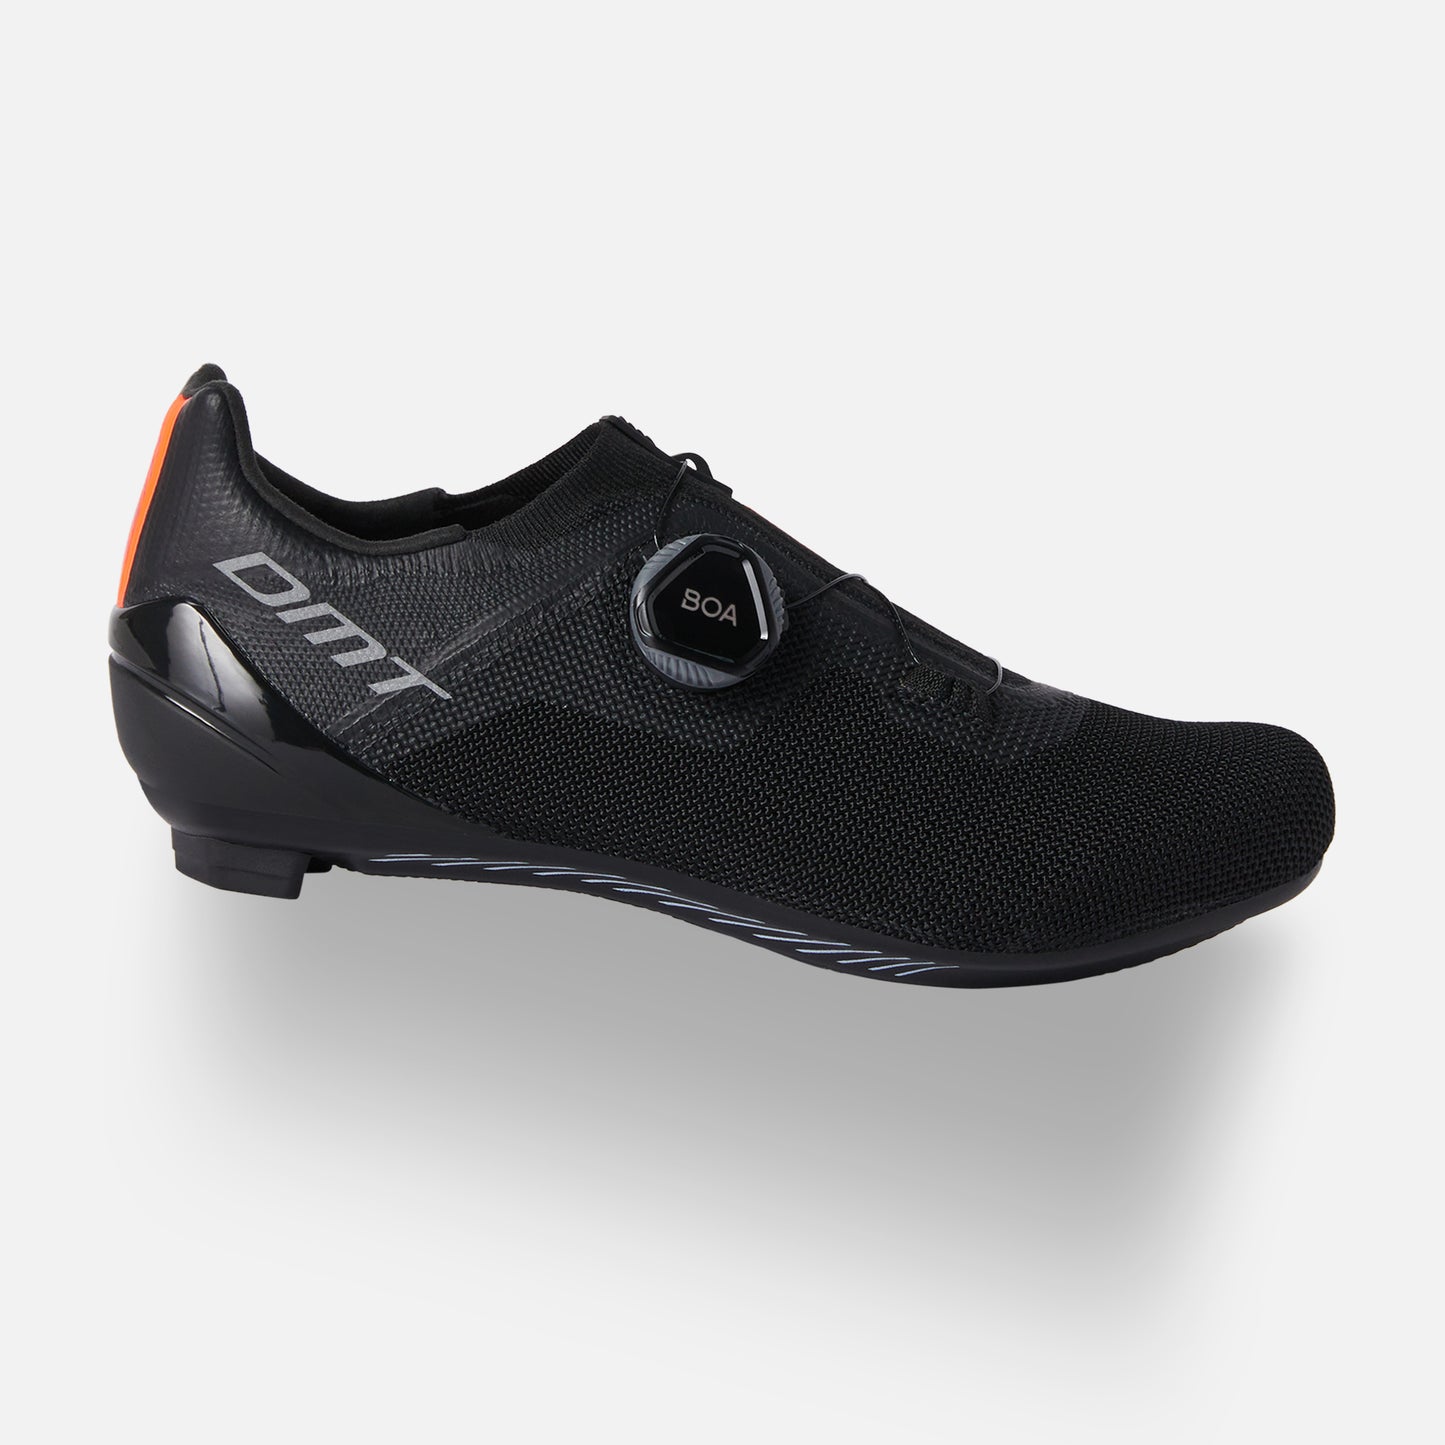 DMT Sh10 bike shoes Black/Black - DMT Cycling